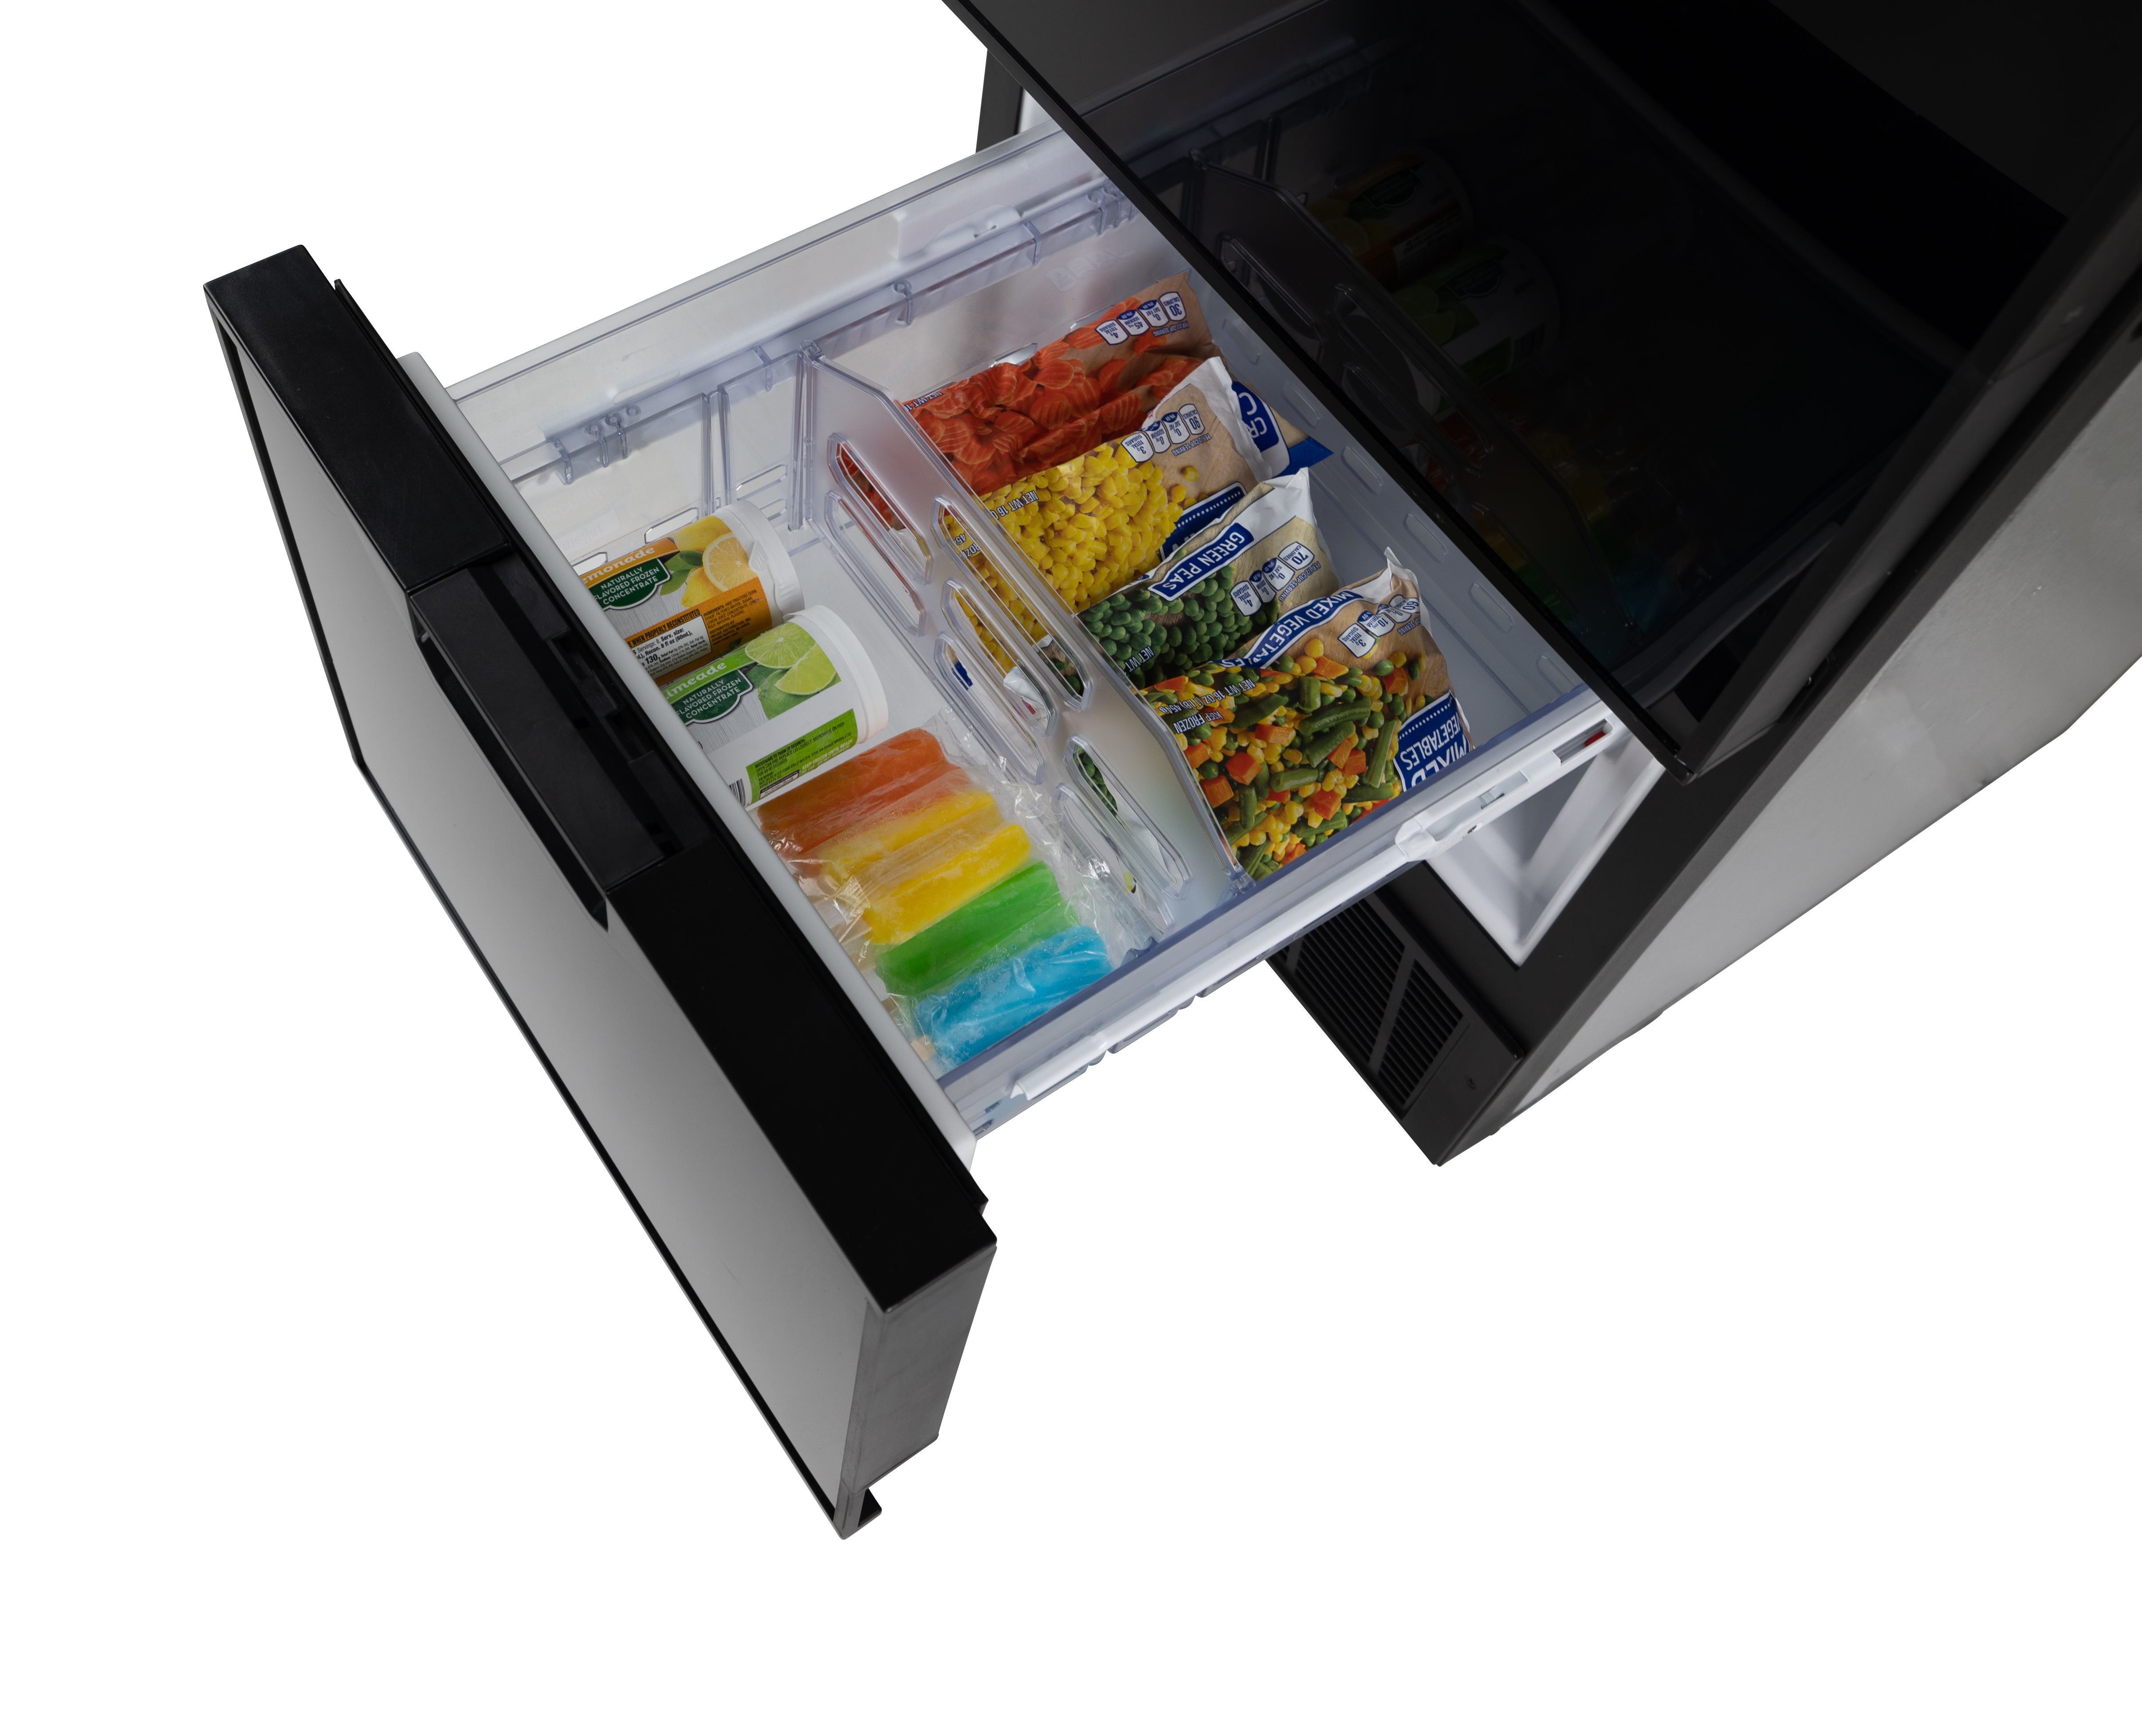 1210 Ultraline RV refrigerator - 12 cubic feet of storage encased in luxury